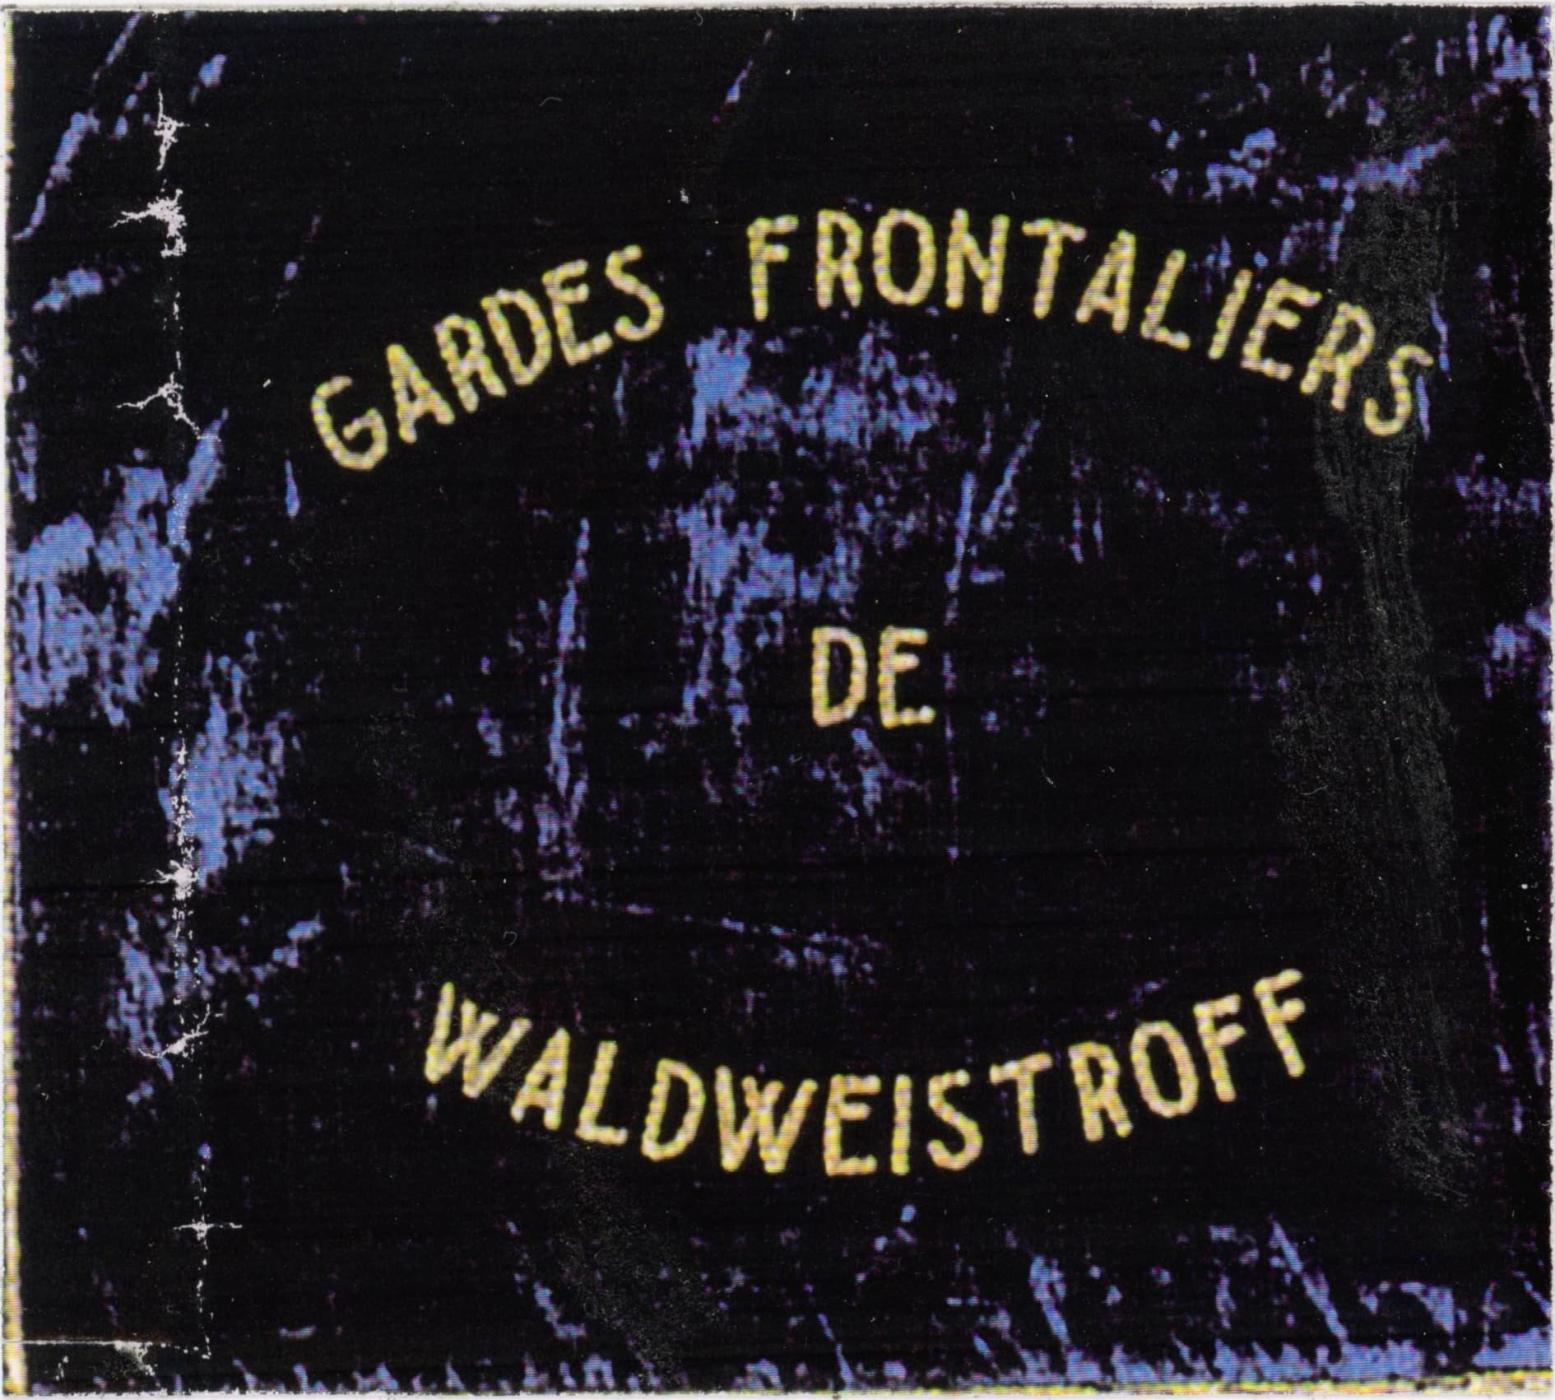 Ligne Maginot - Compagnie de Gardes Frontaliers (CGF) - Fanion de la section de Waldweistroff